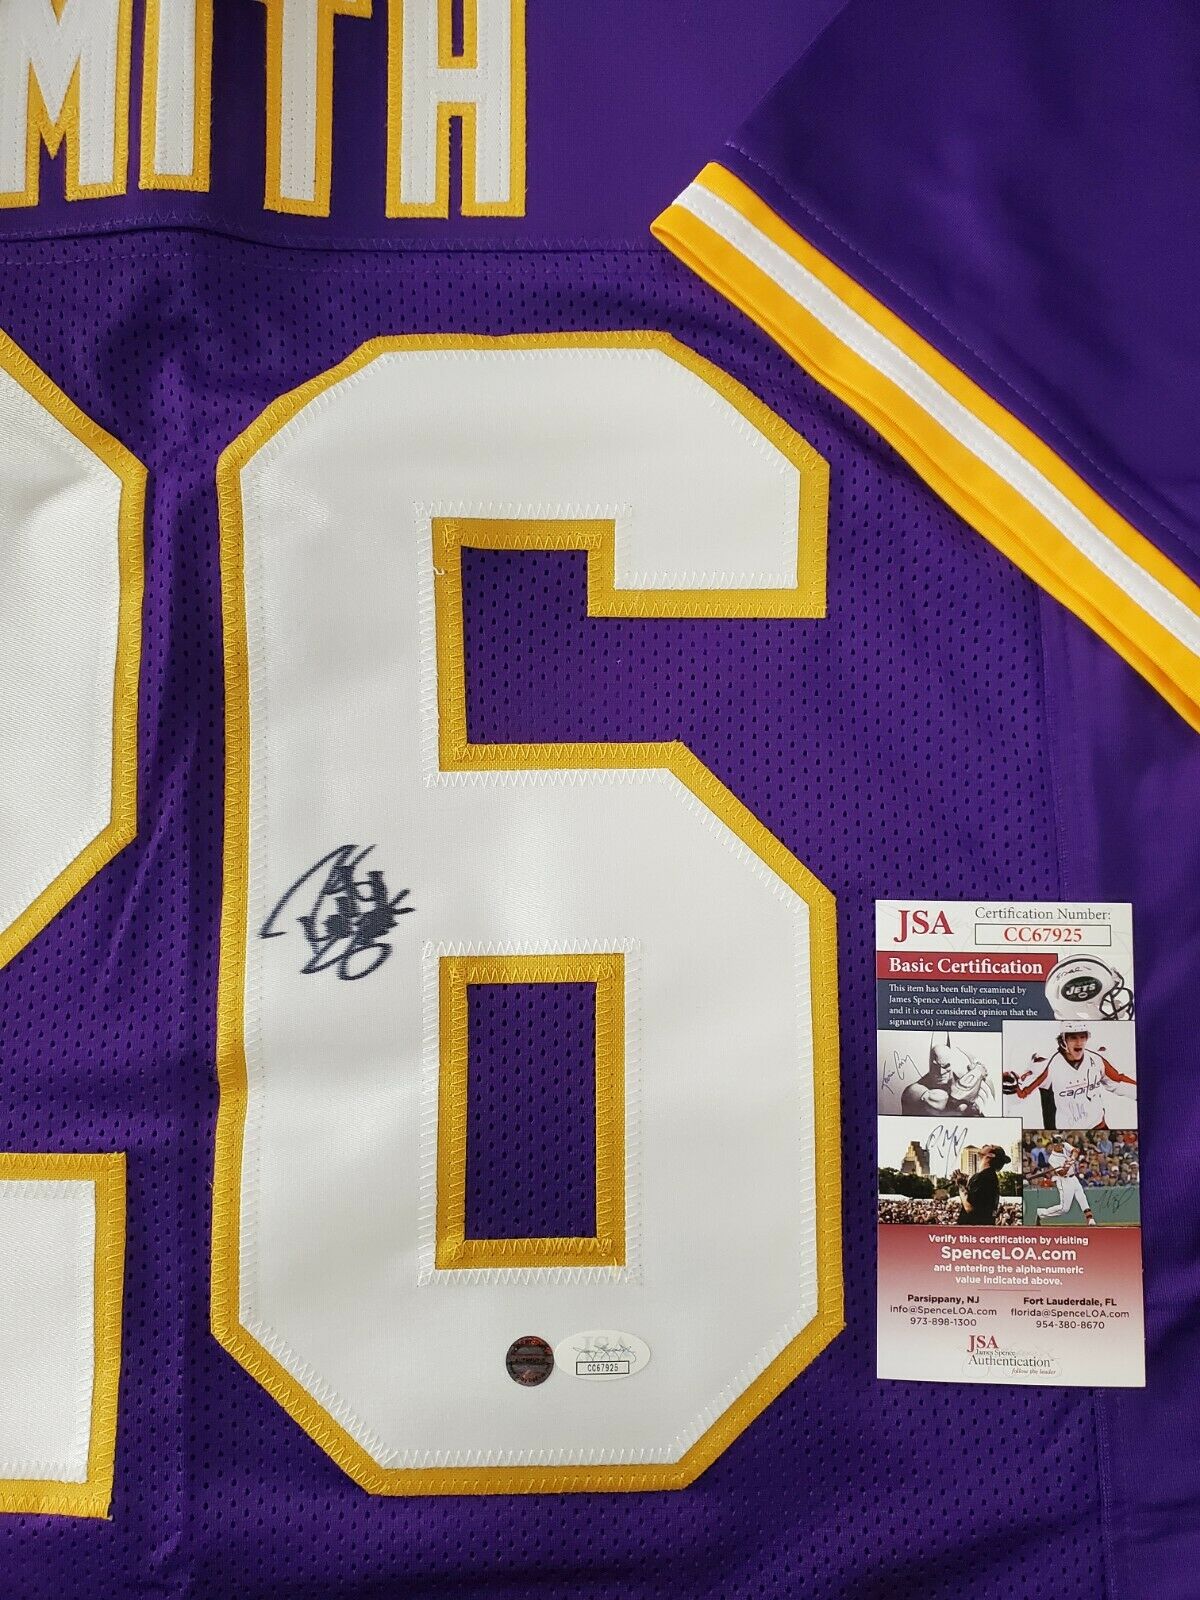 MVP Authentics Minnesota Vikings Robert Smith Jr Autographed Signed Jersey Jsa Coa 116.10 sports jersey framing , jersey framing